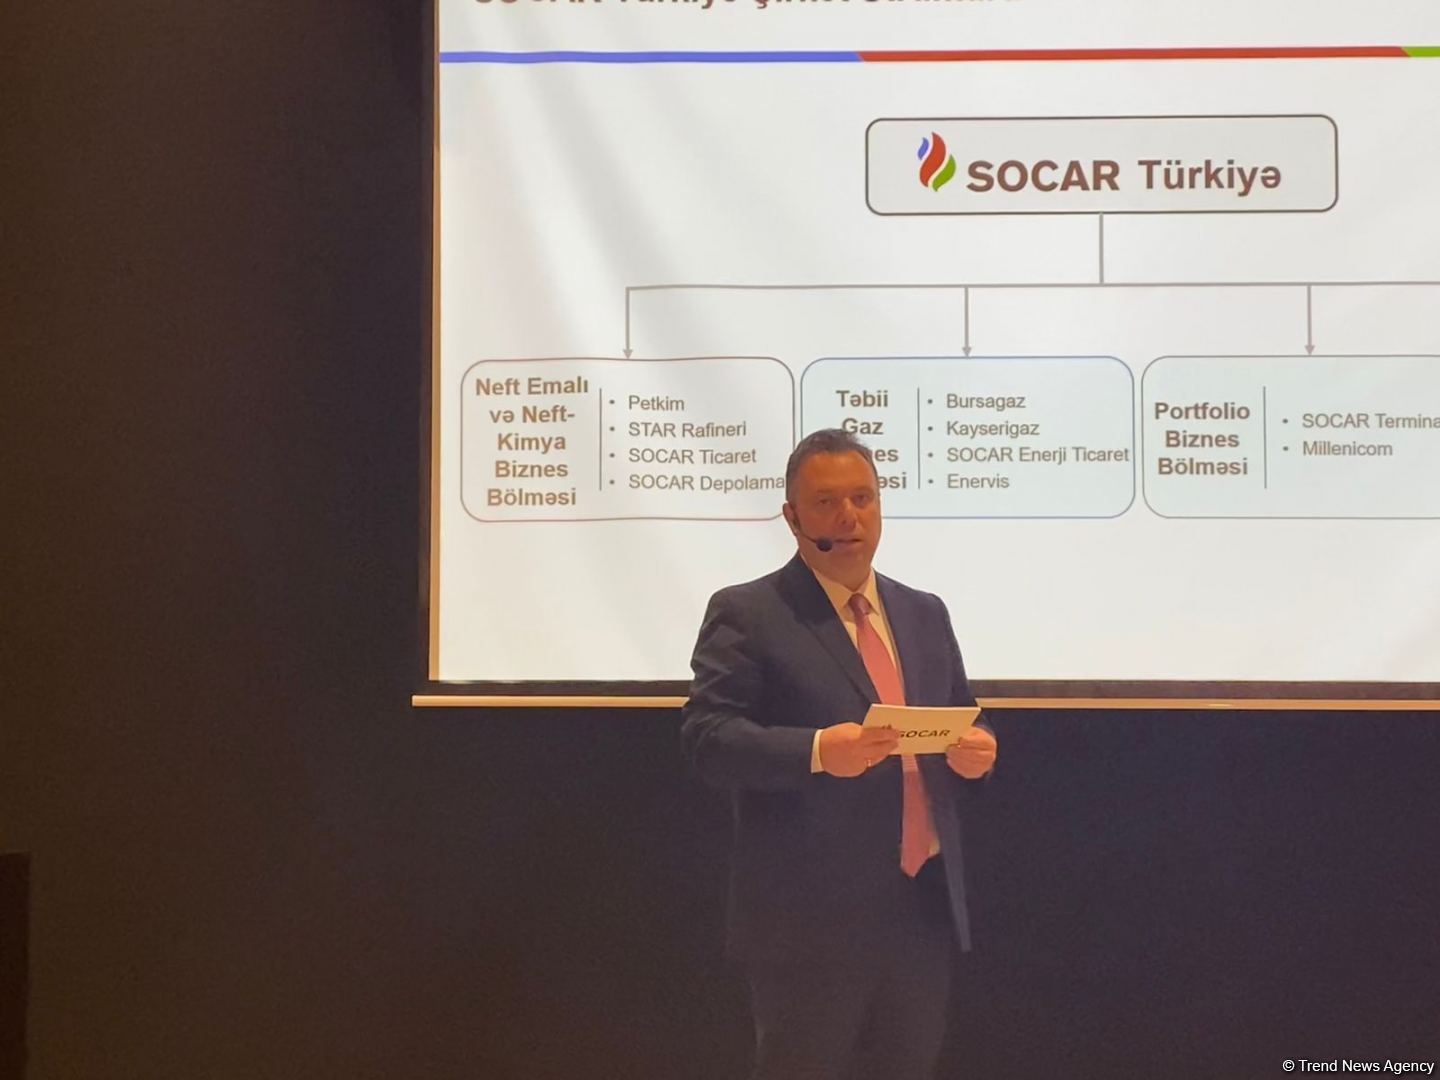 SOCAR Türkiye plans to carry out Petkim maintenance every five years